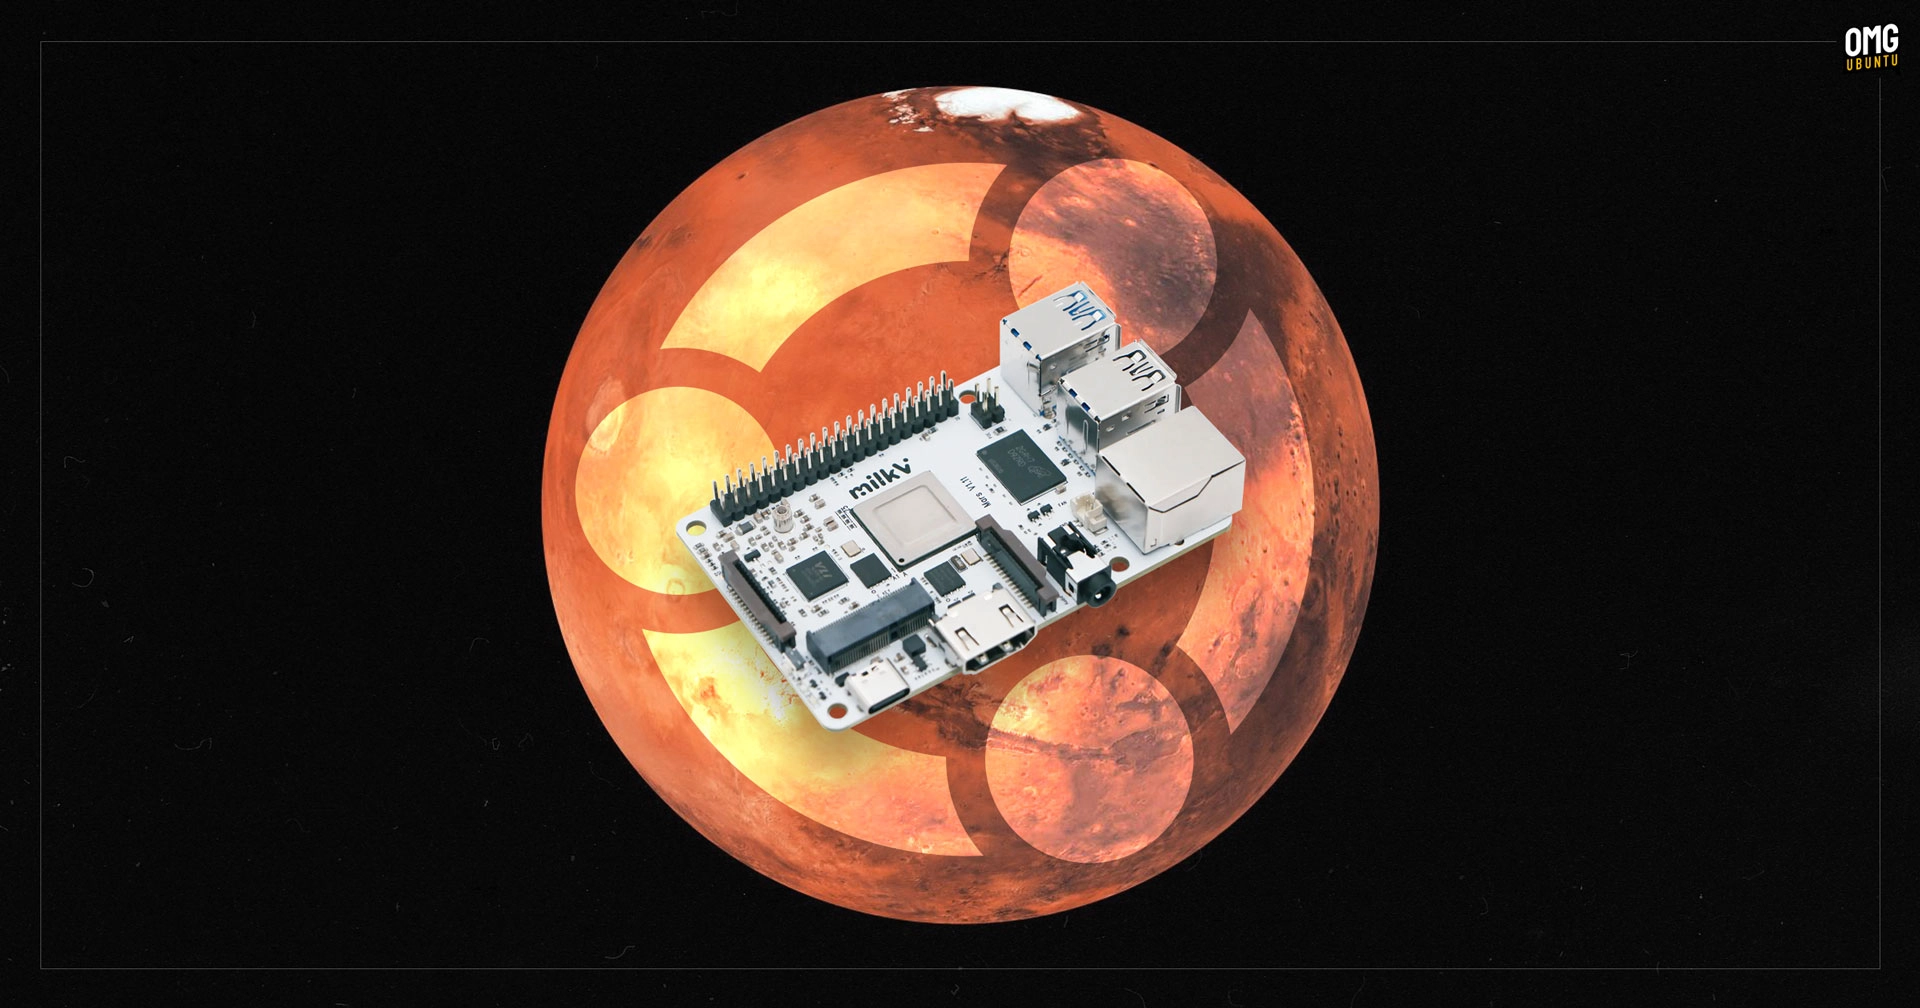 Ubuntu 24.04 Debuts on the Milk-V Mars (RISC-V Computer): The New Era of Space Computing